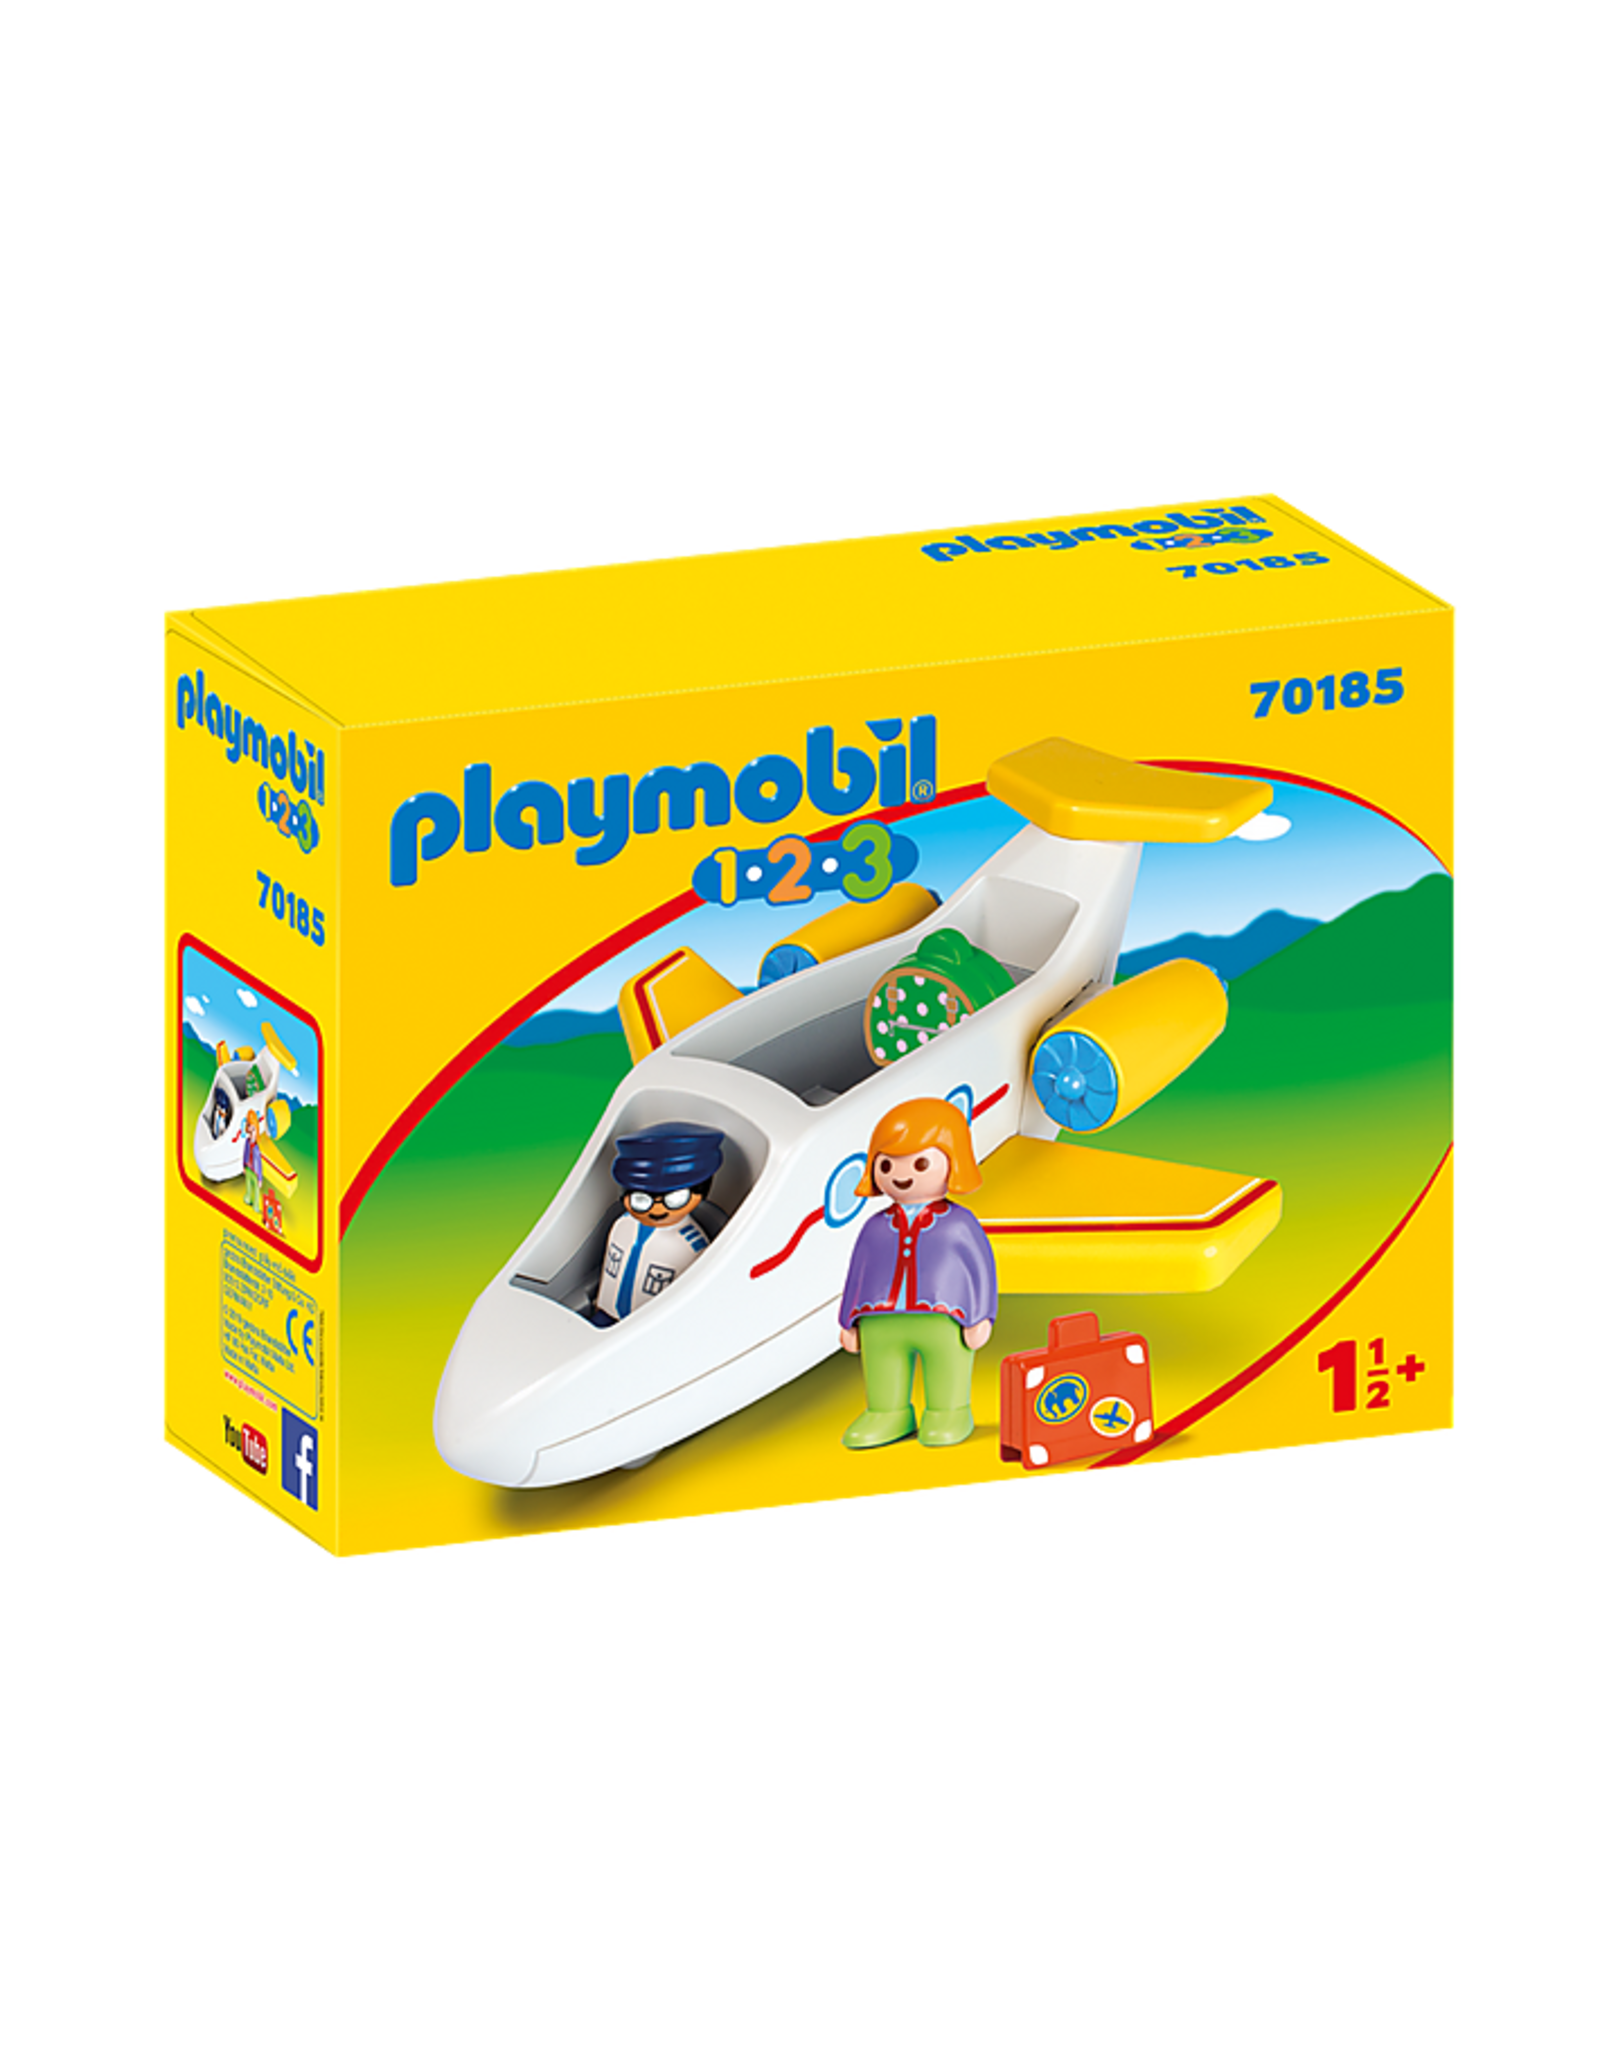 Playmobil 1.2.3 Plane with Passenger